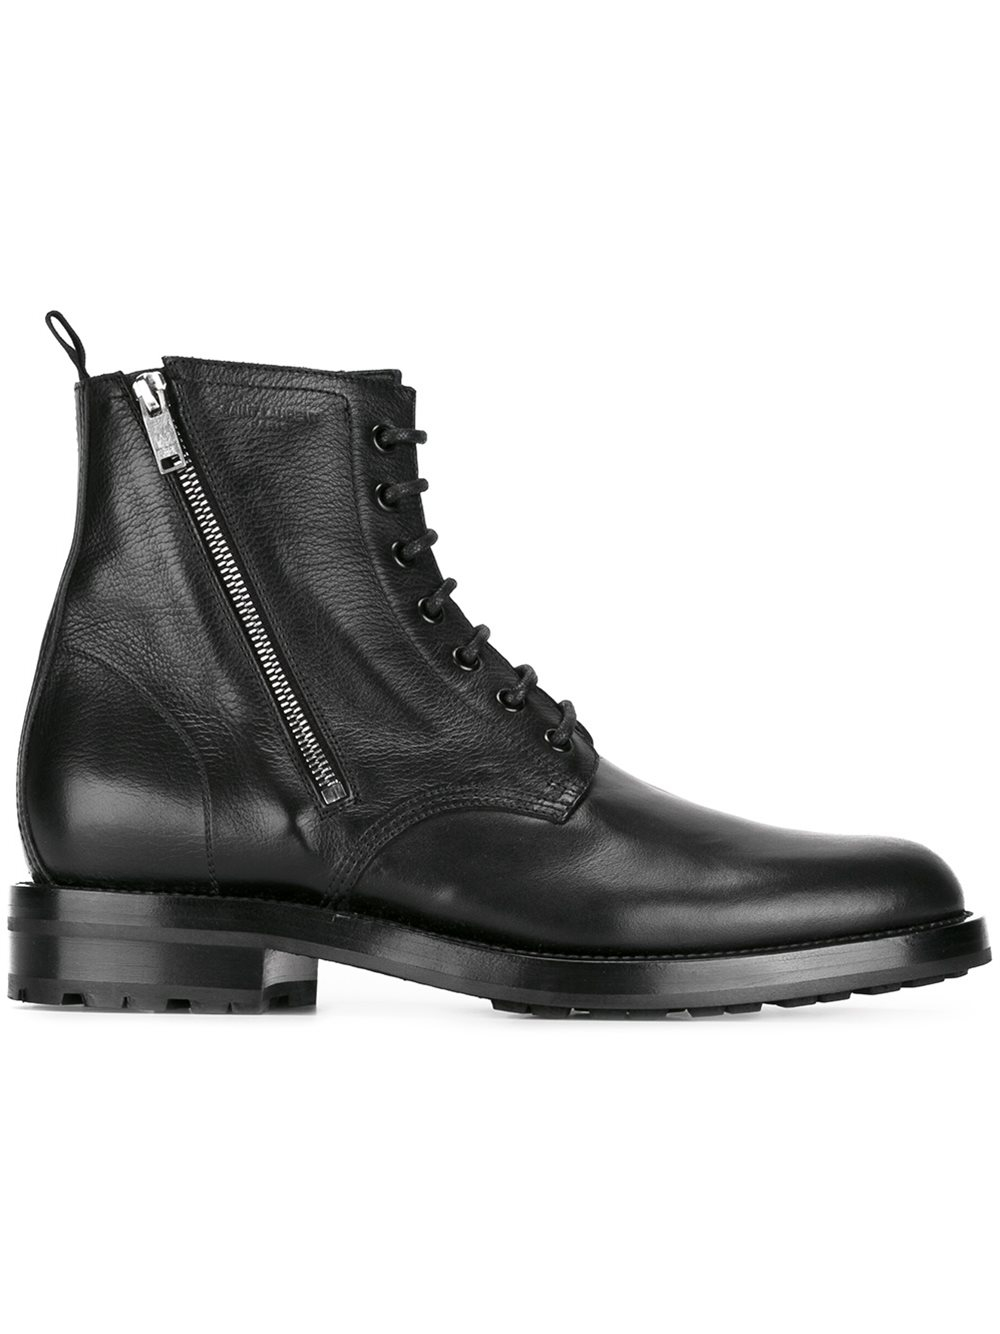 Lyst - Saint Laurent 'Ranger Leather Combat Boots in Black for Men